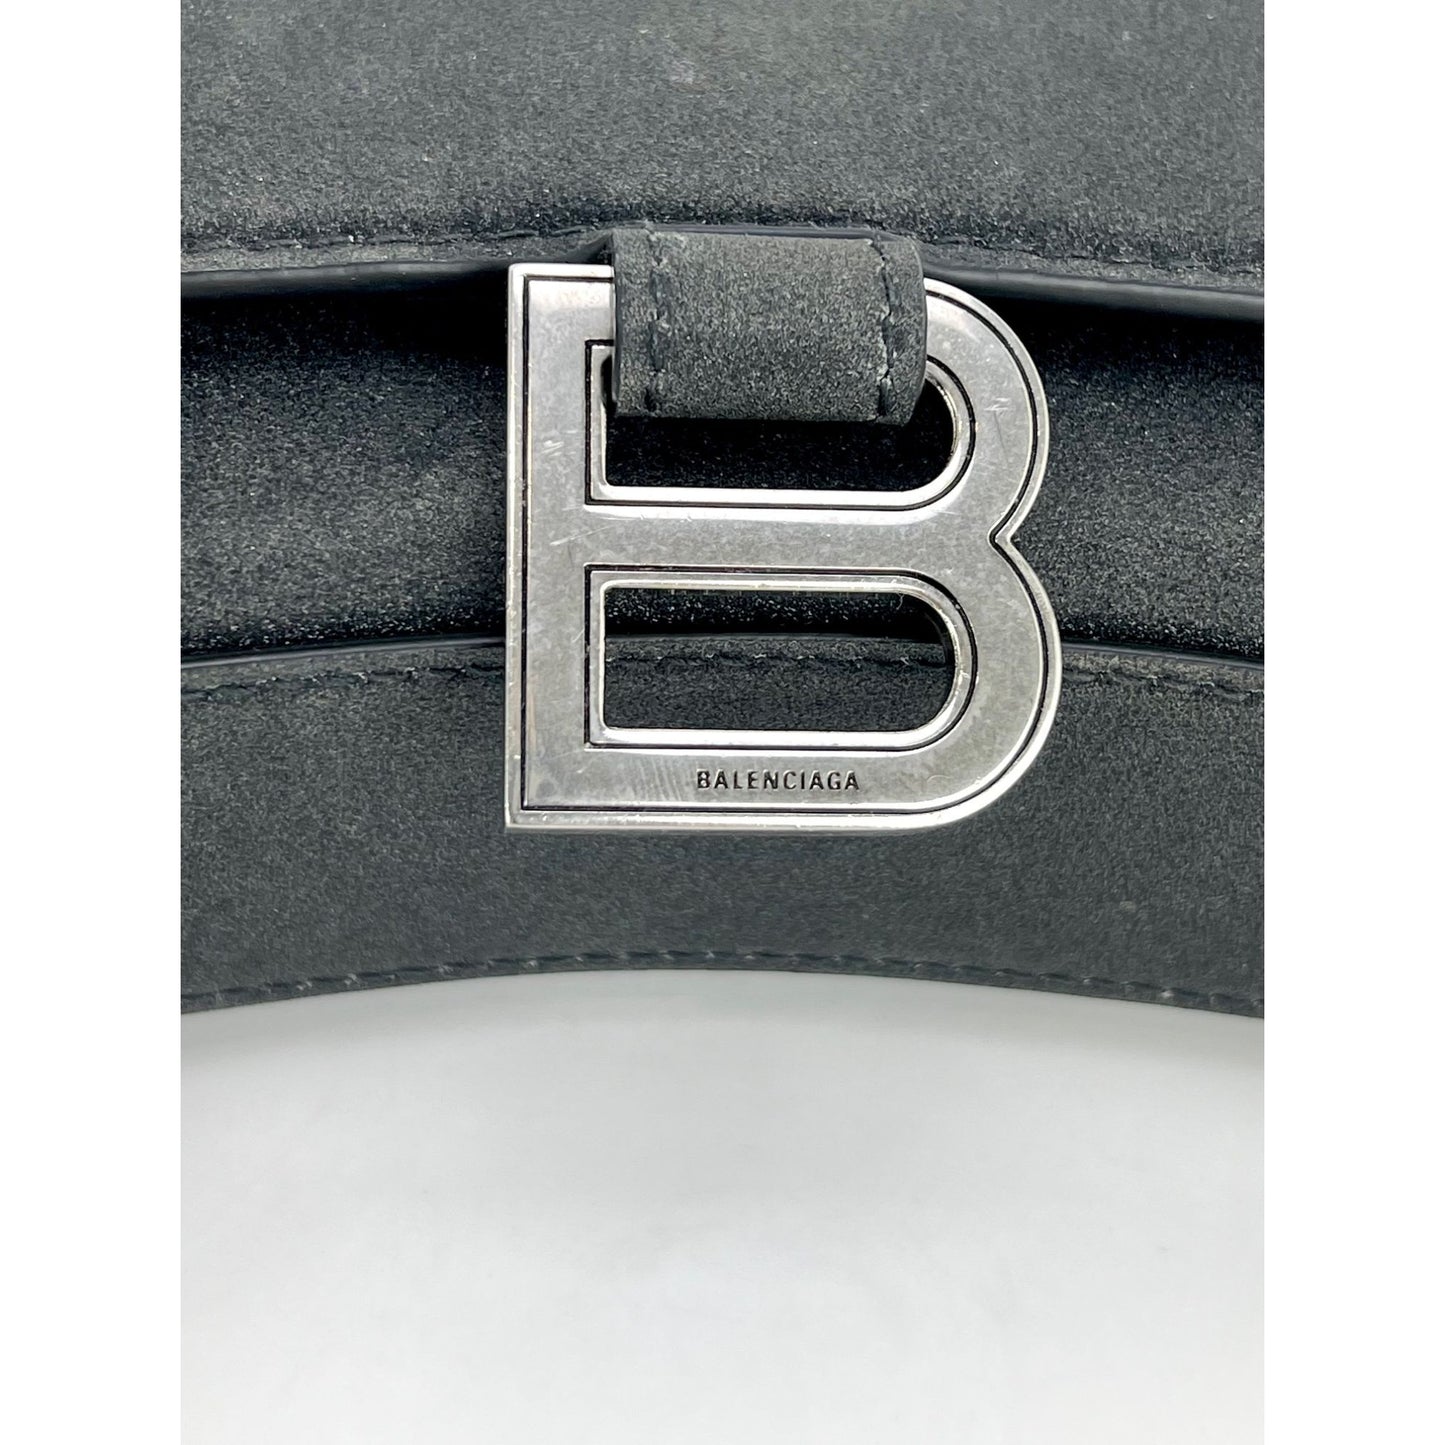 Authentic FENDI B Buckle Black Nappa & Patent Leather Satchel Shoulder  Handbag